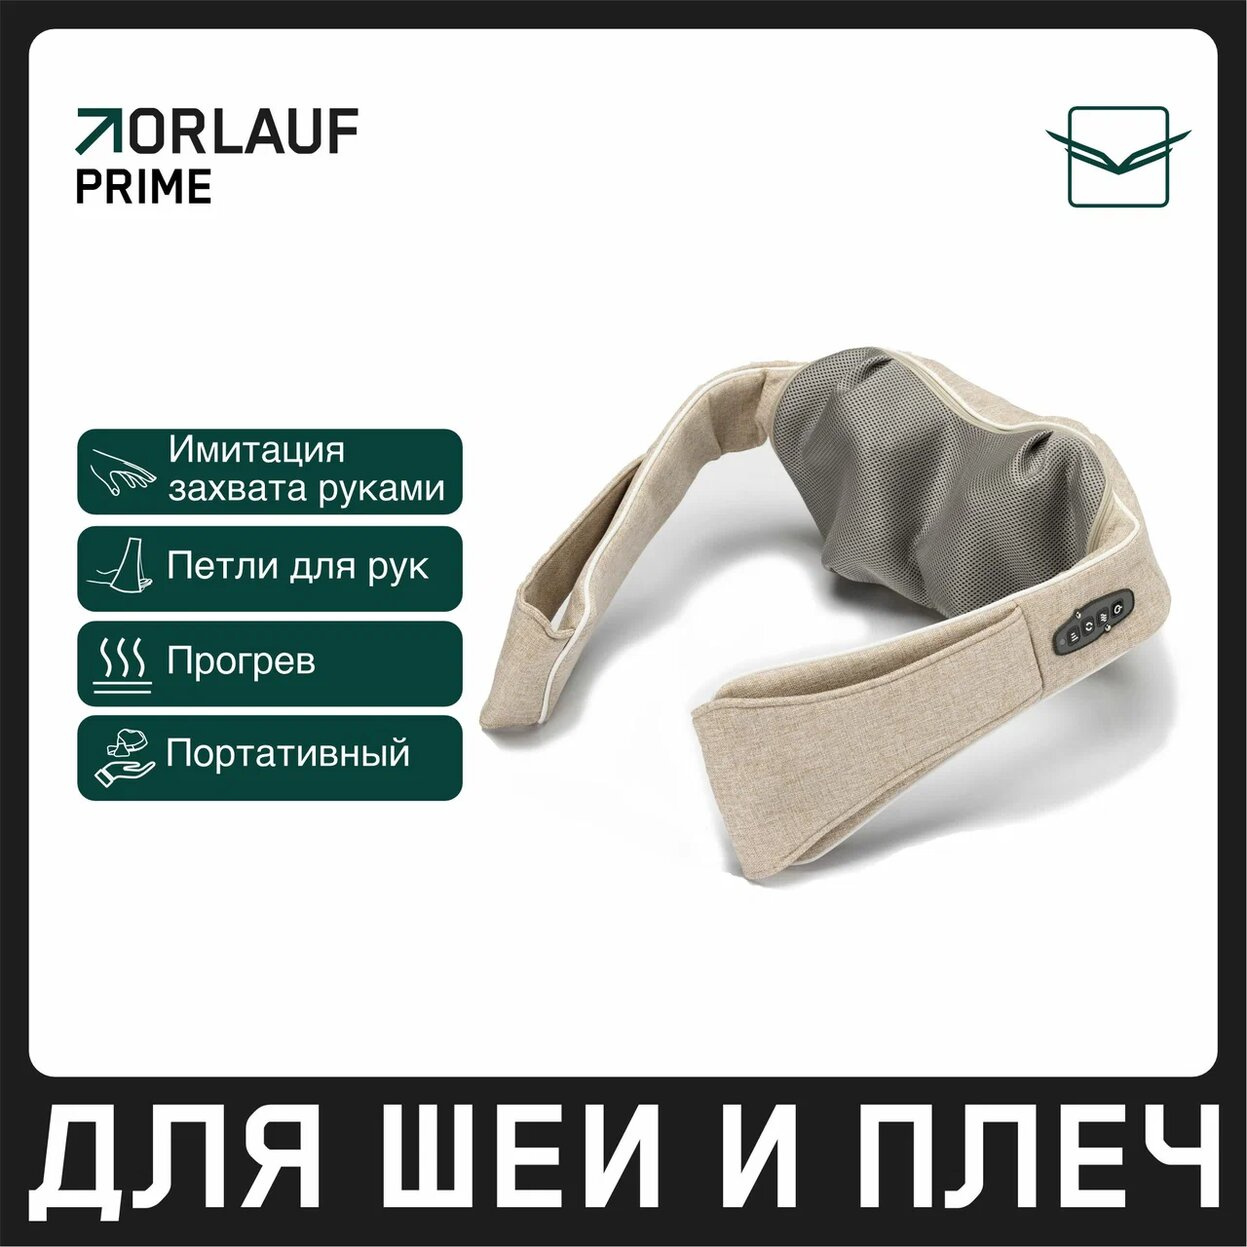 Orlauf Prime из каталога устройств для массажа в Казани по цене 11900 ₽